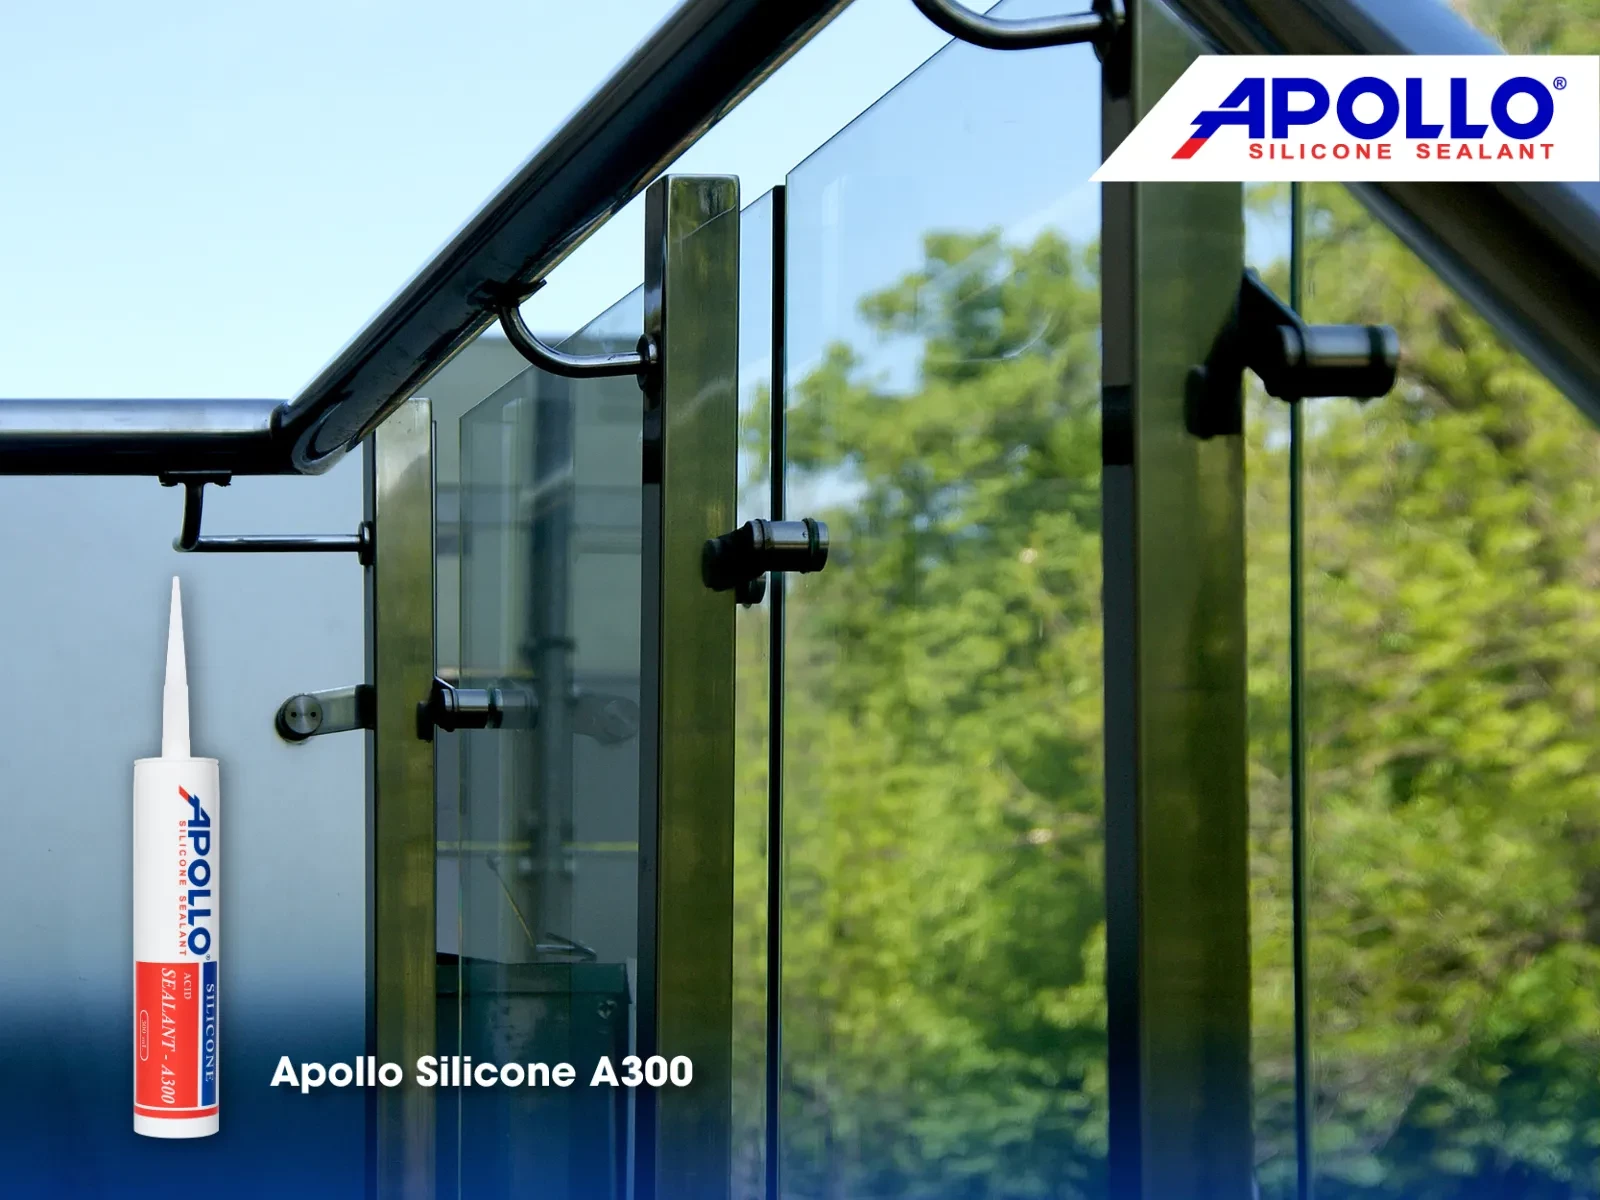 Apollo Silicone Sealant A300 - Vua keo kính phù hợp để dán kính bể cá 